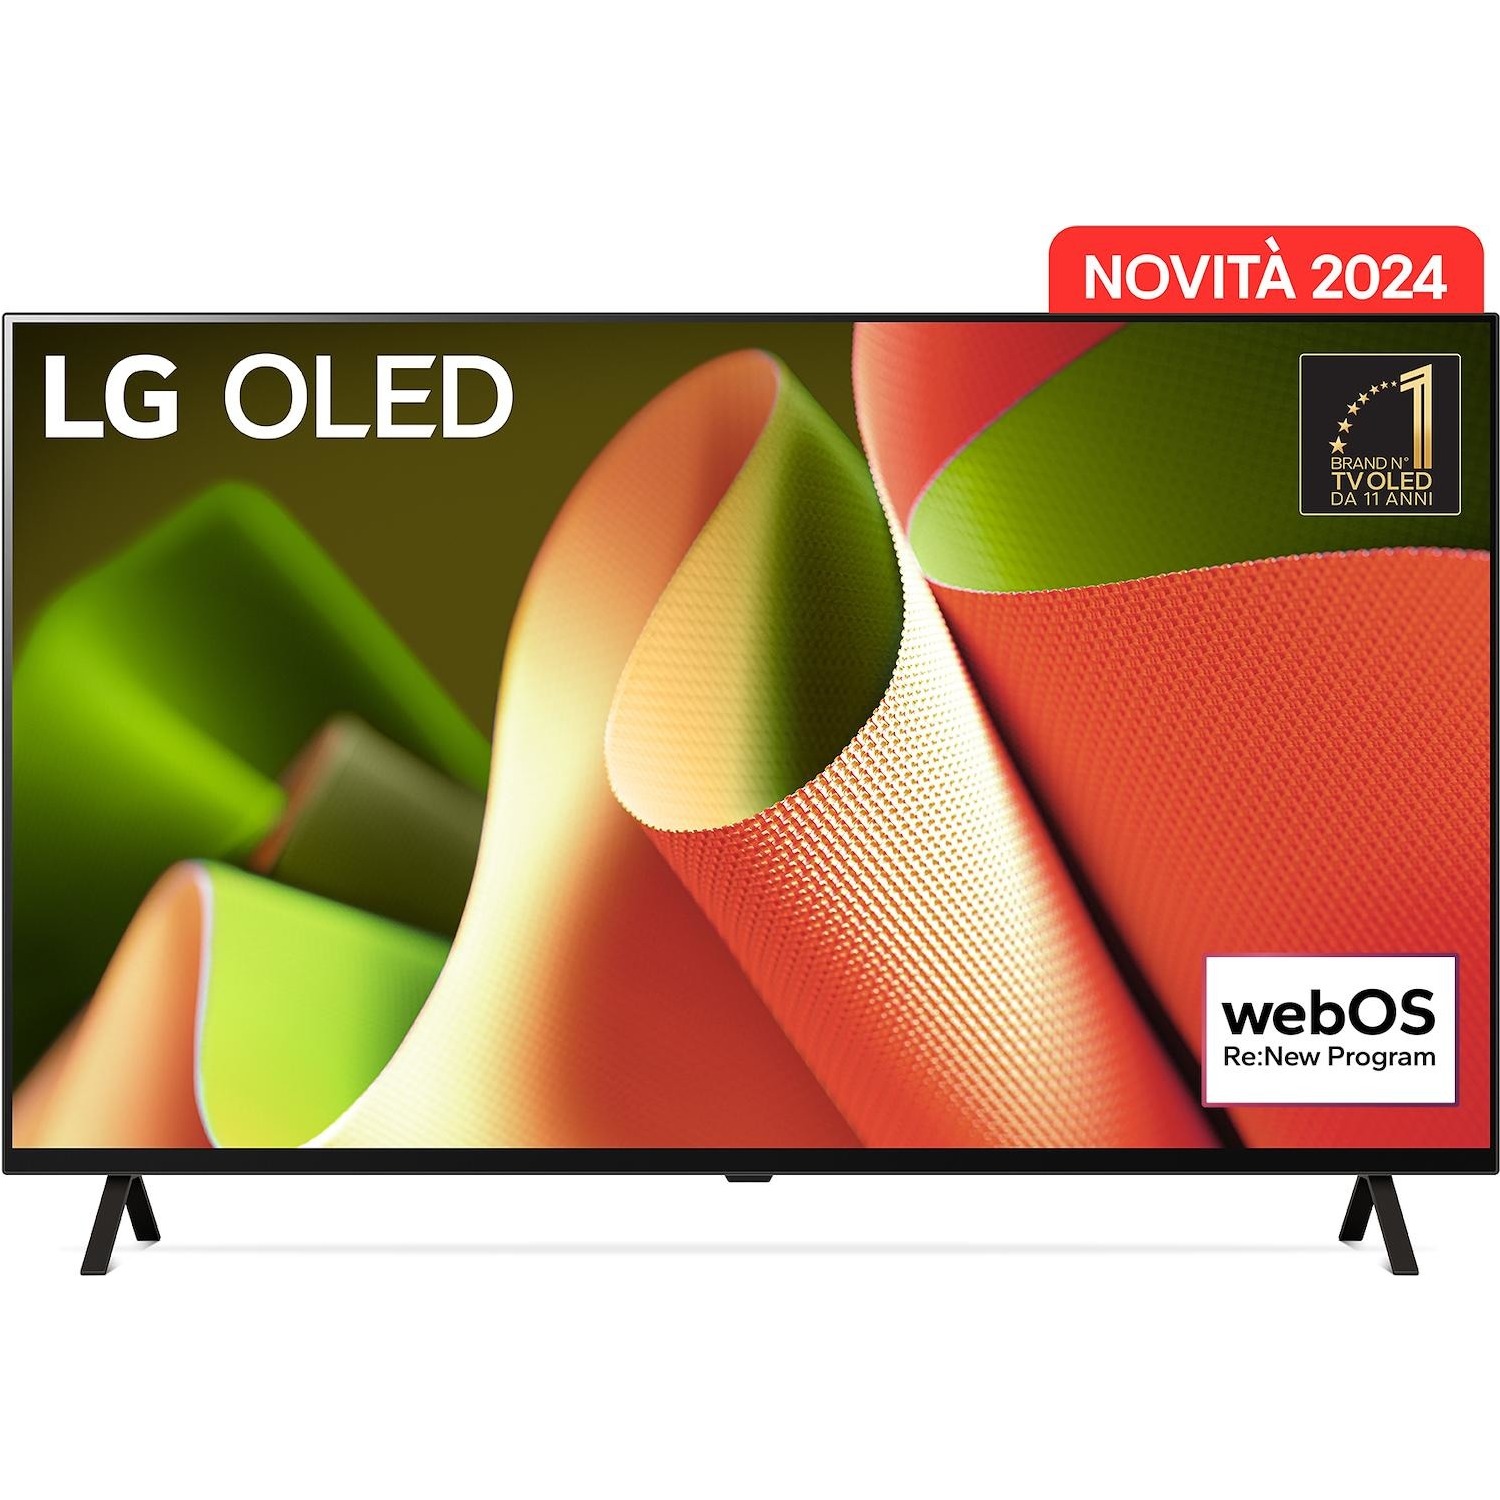 Immagine per TV OLED UHD 4K Smart LG OLED55B42 da DIMOStore